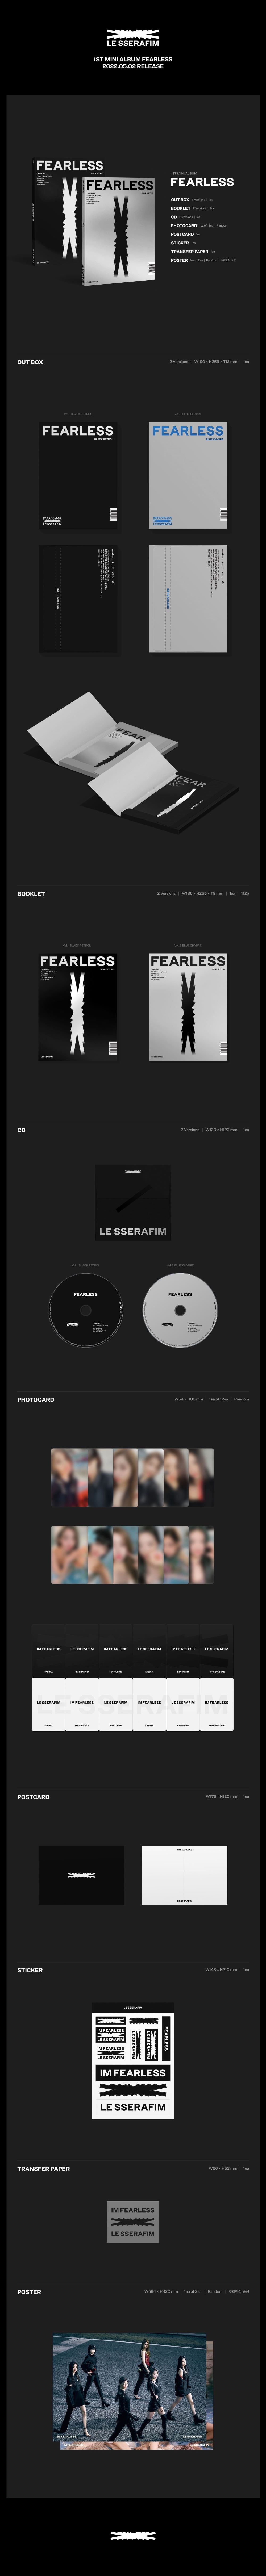 LE SSERAFIM 1st Mini Album FEARLESS